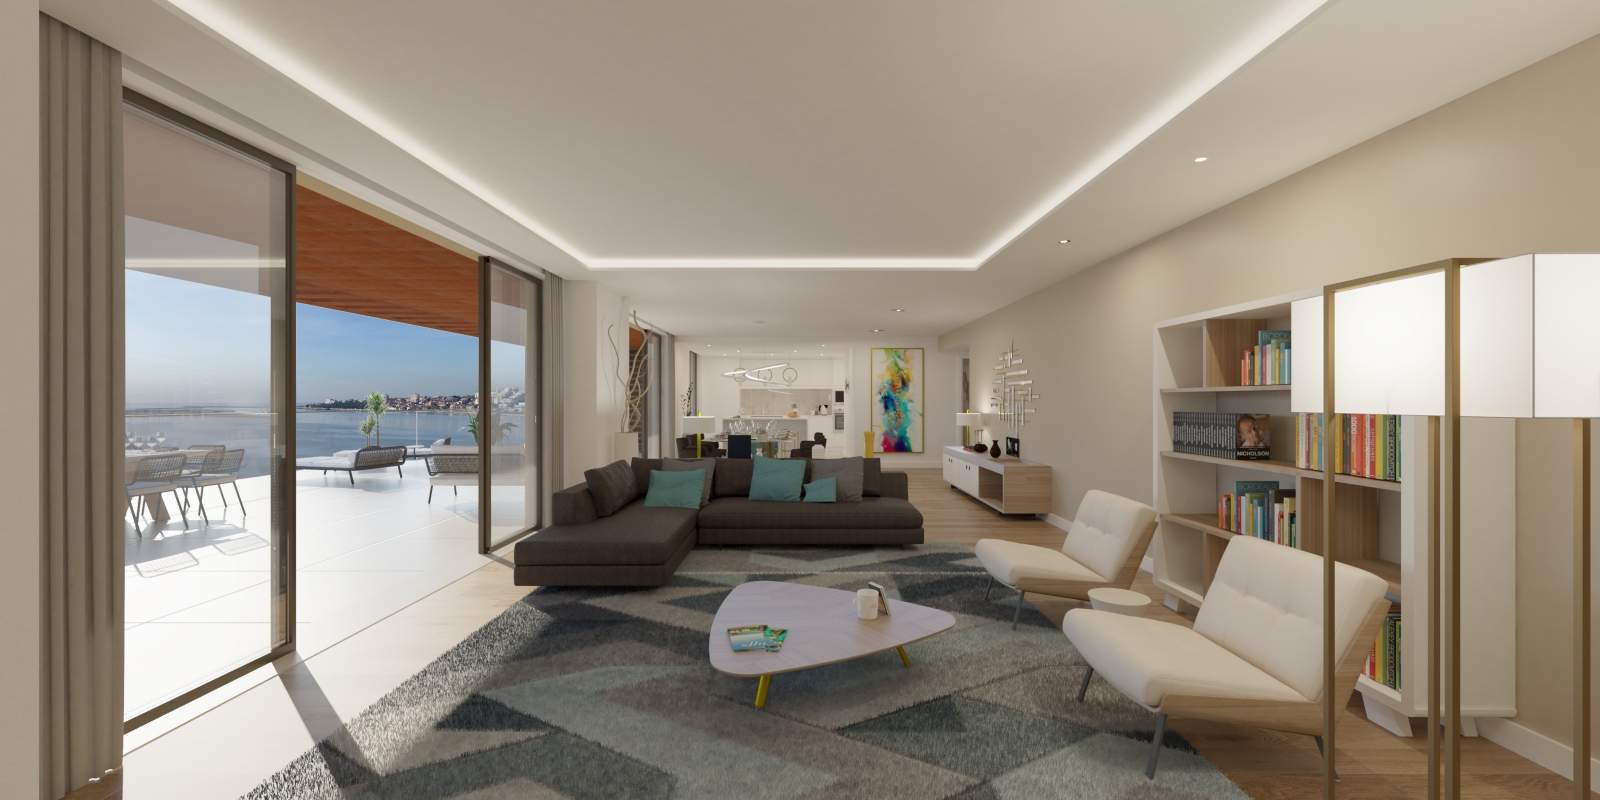 Apartment for sale with terrace, in exclusive condominium, V. N. Gaia, Porto, Portugal_175506